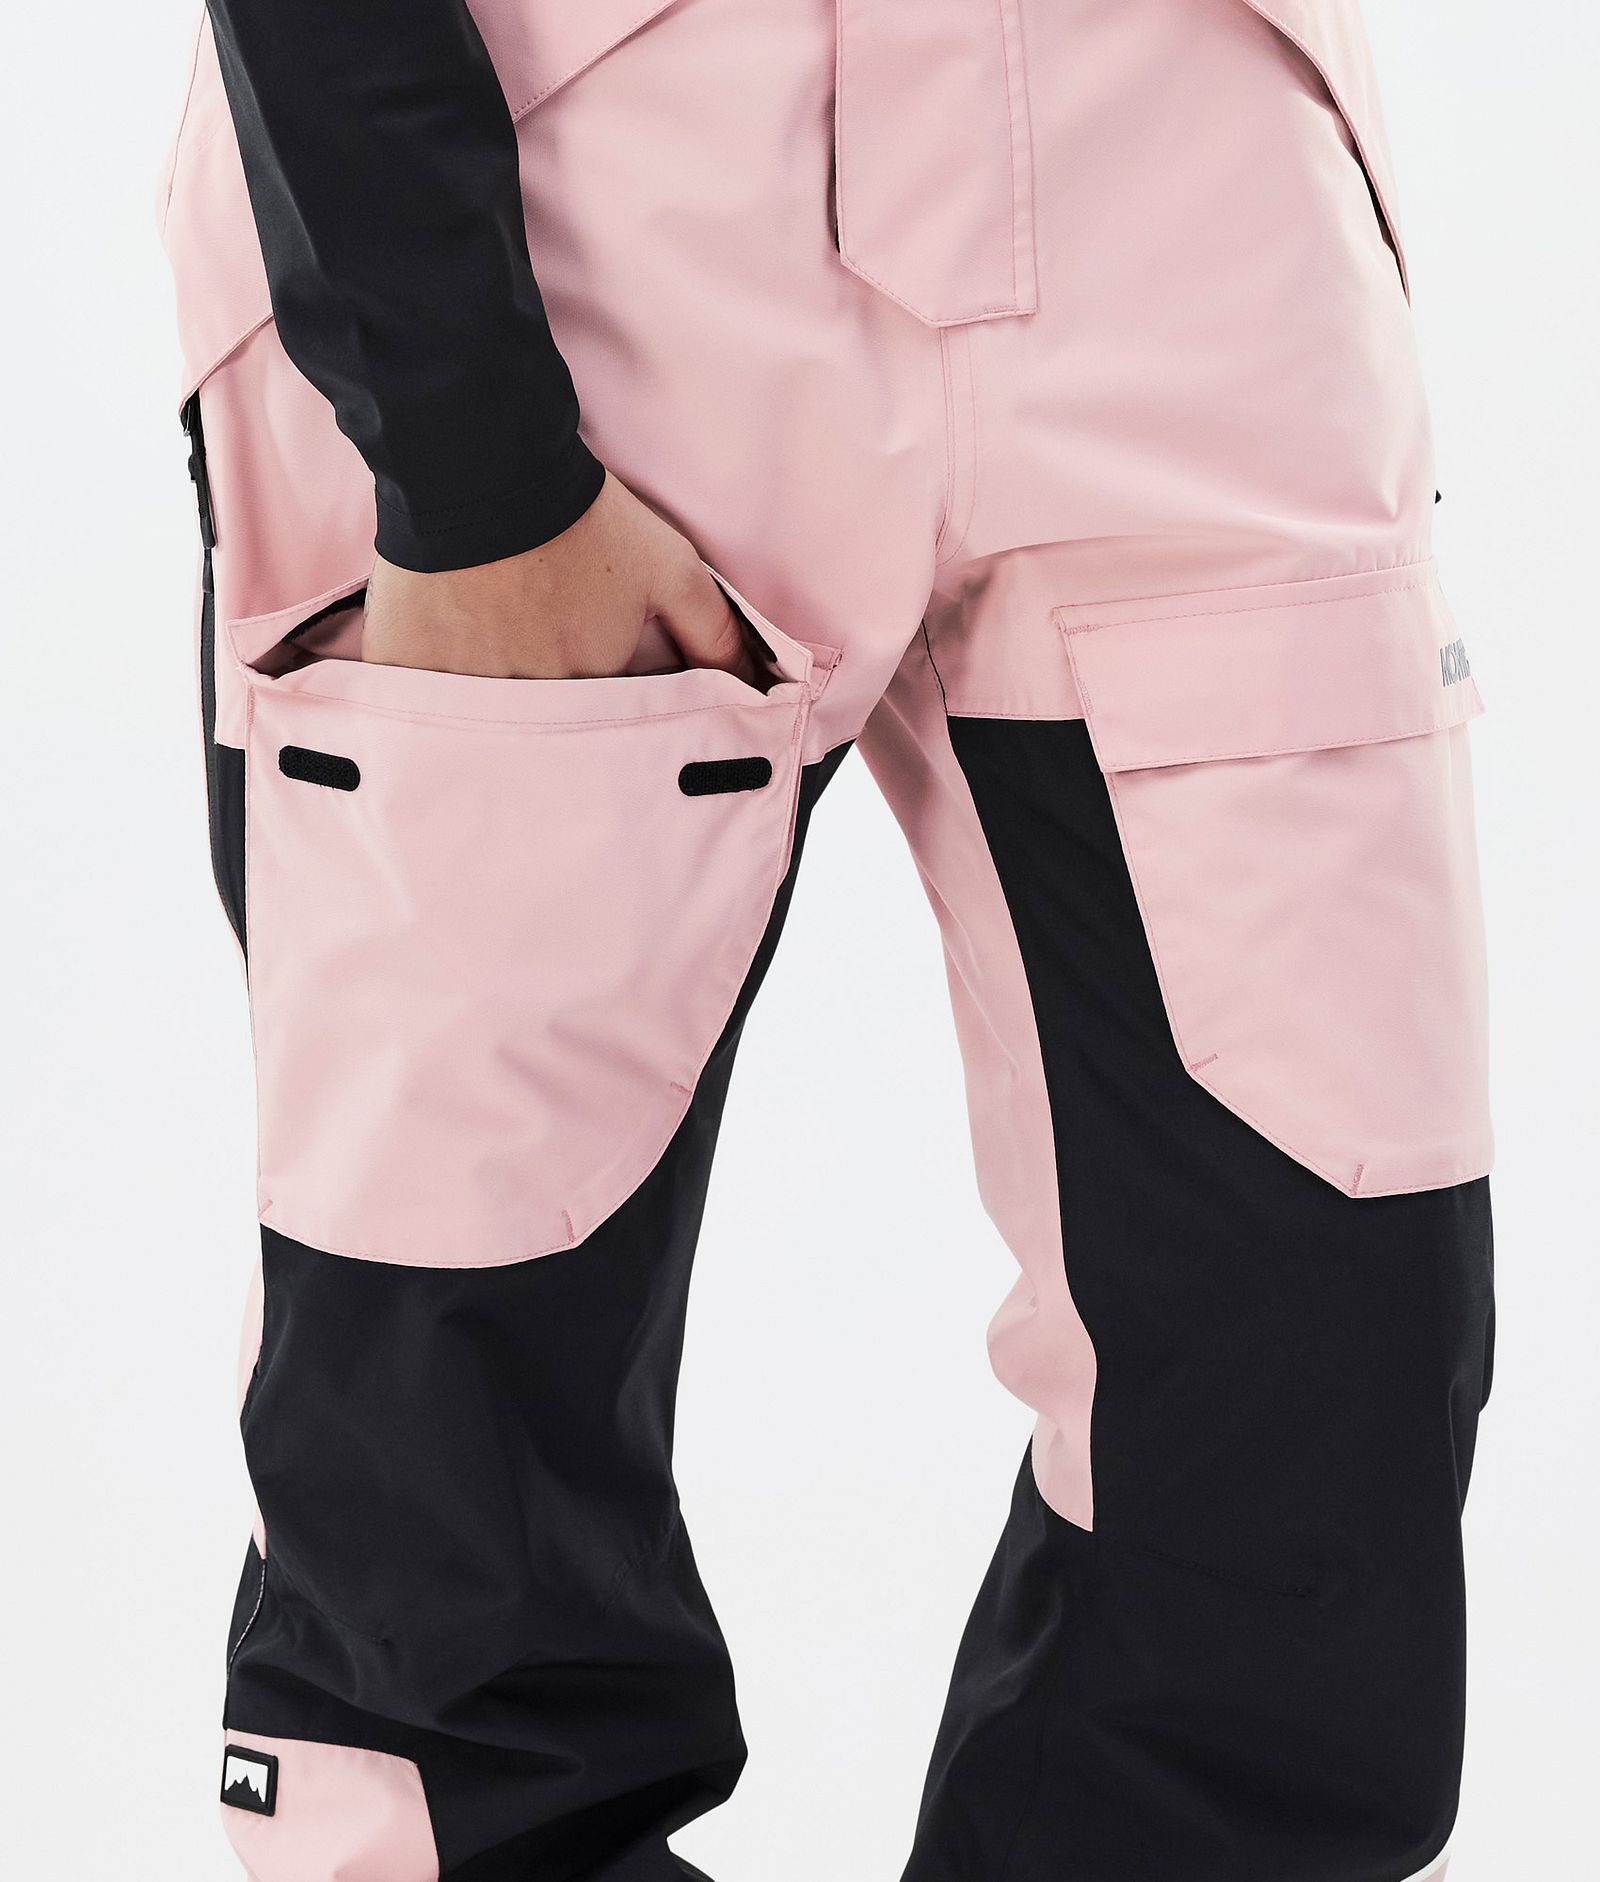 Montec Fawk W Kalhoty na Snowboard Dámské Soft Pink/ Black